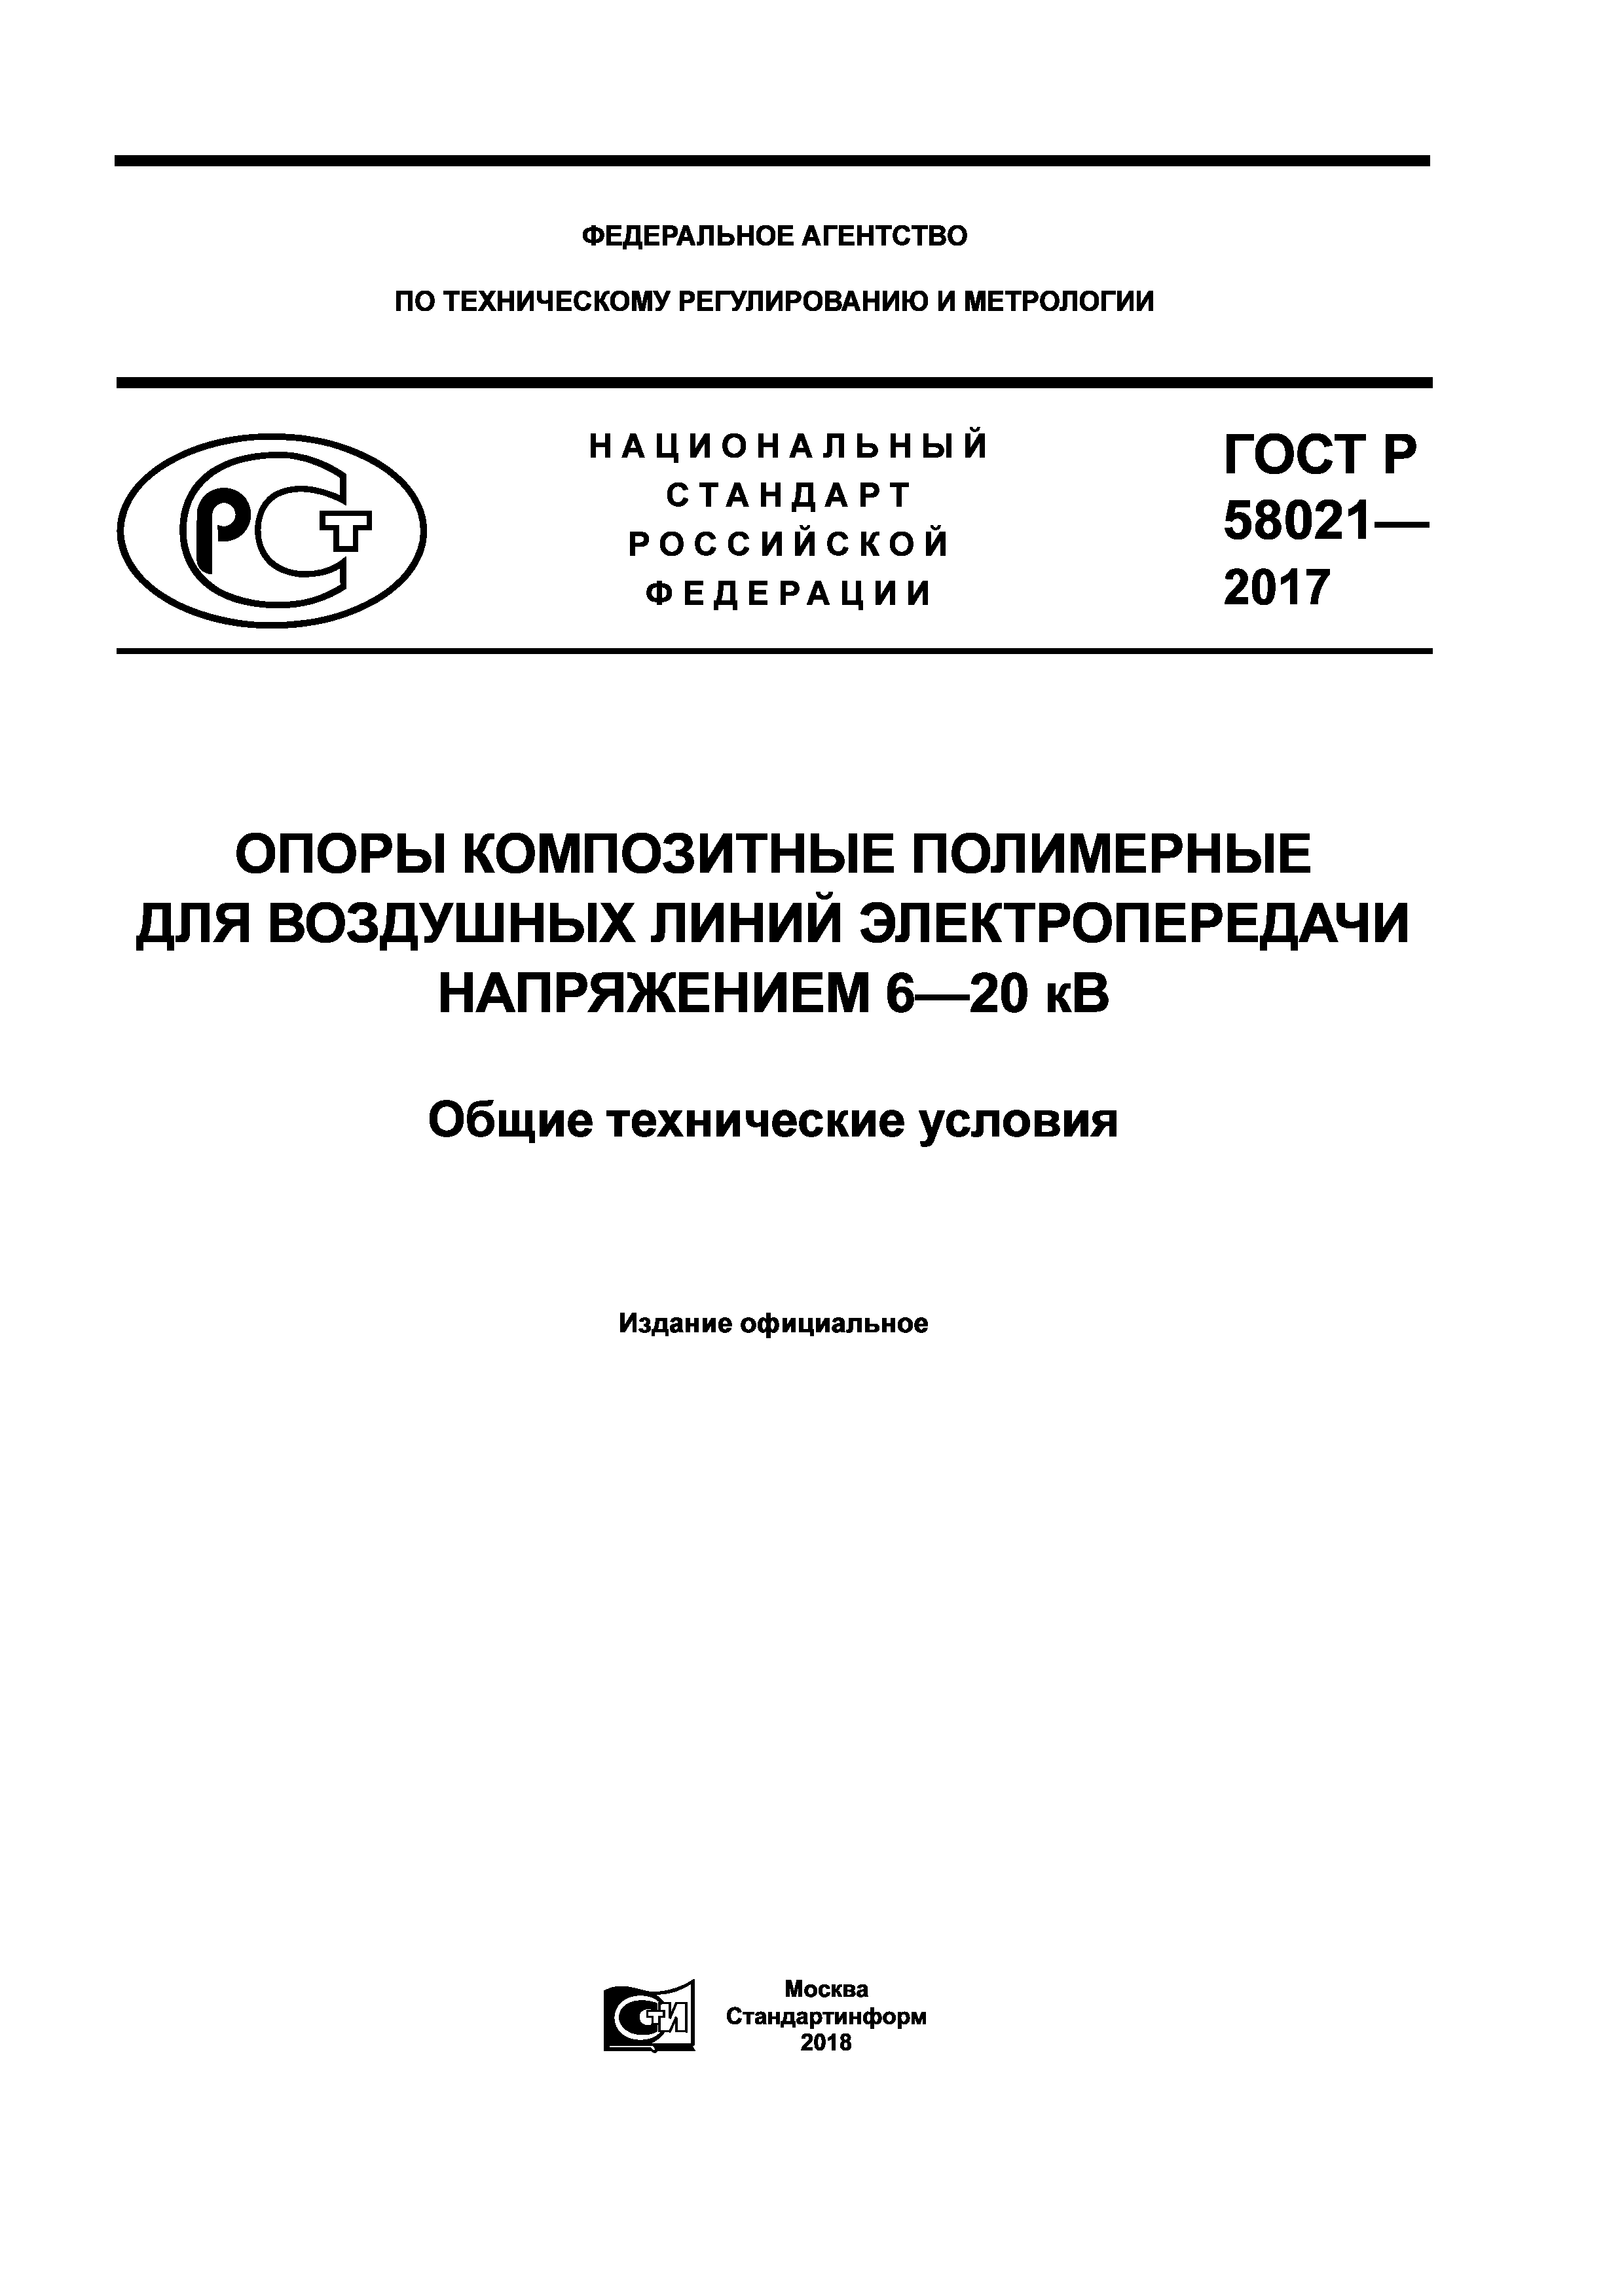 ГОСТ Р 58021-2017